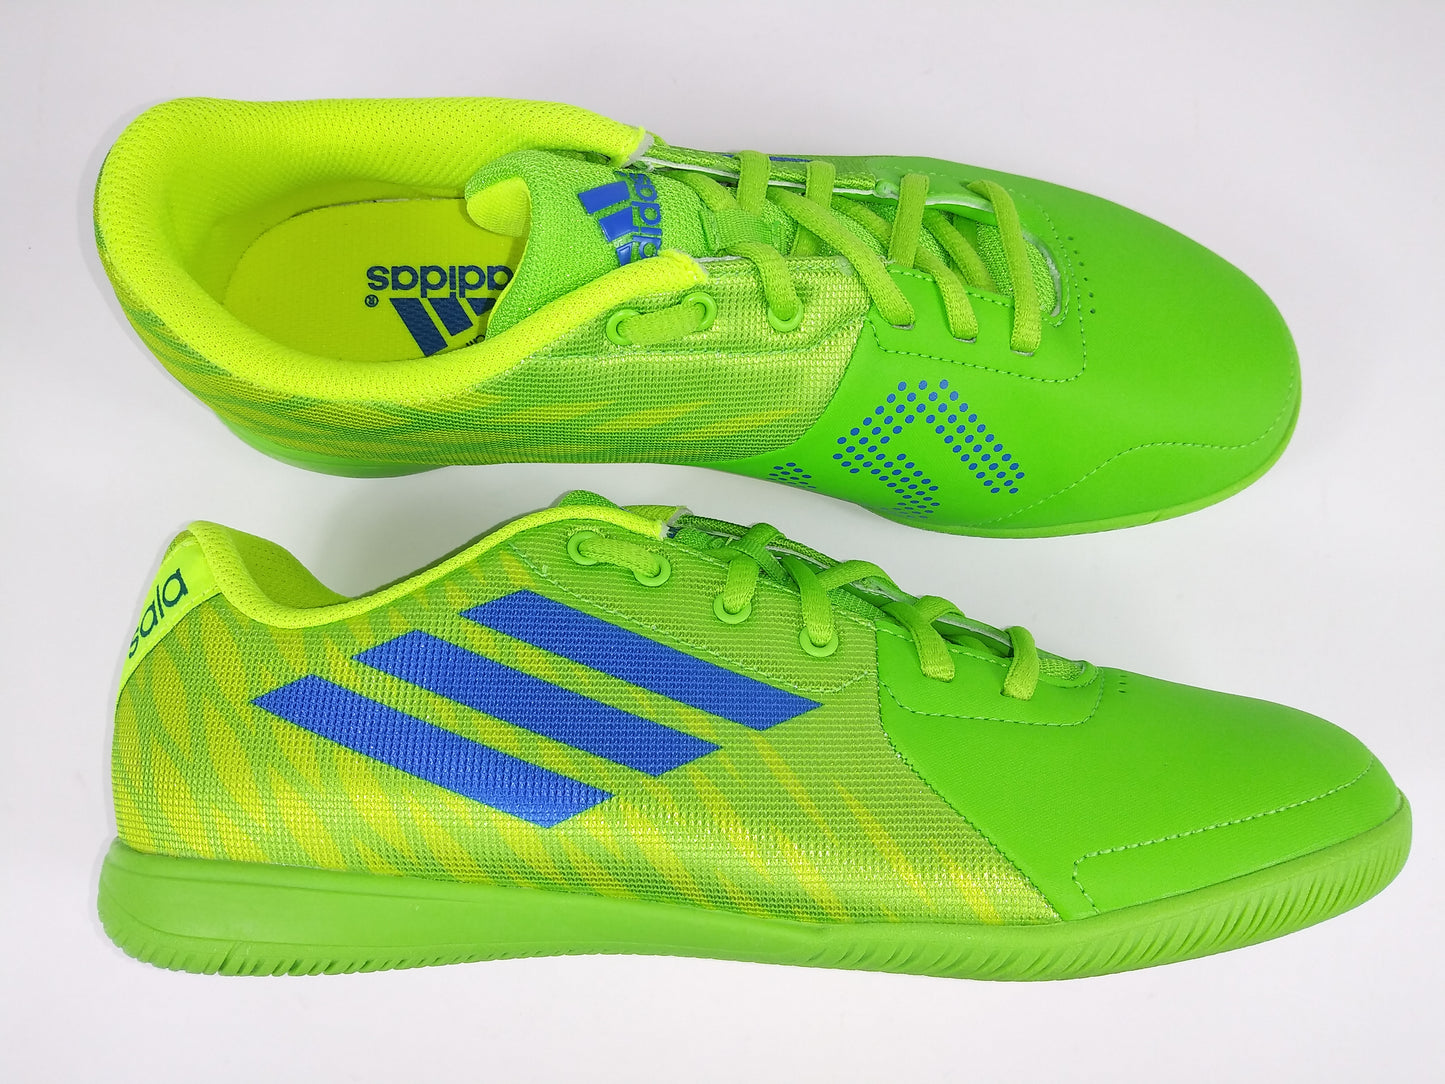 Adidas freefootball SpeedKick Indoor Shoes Green Yellow